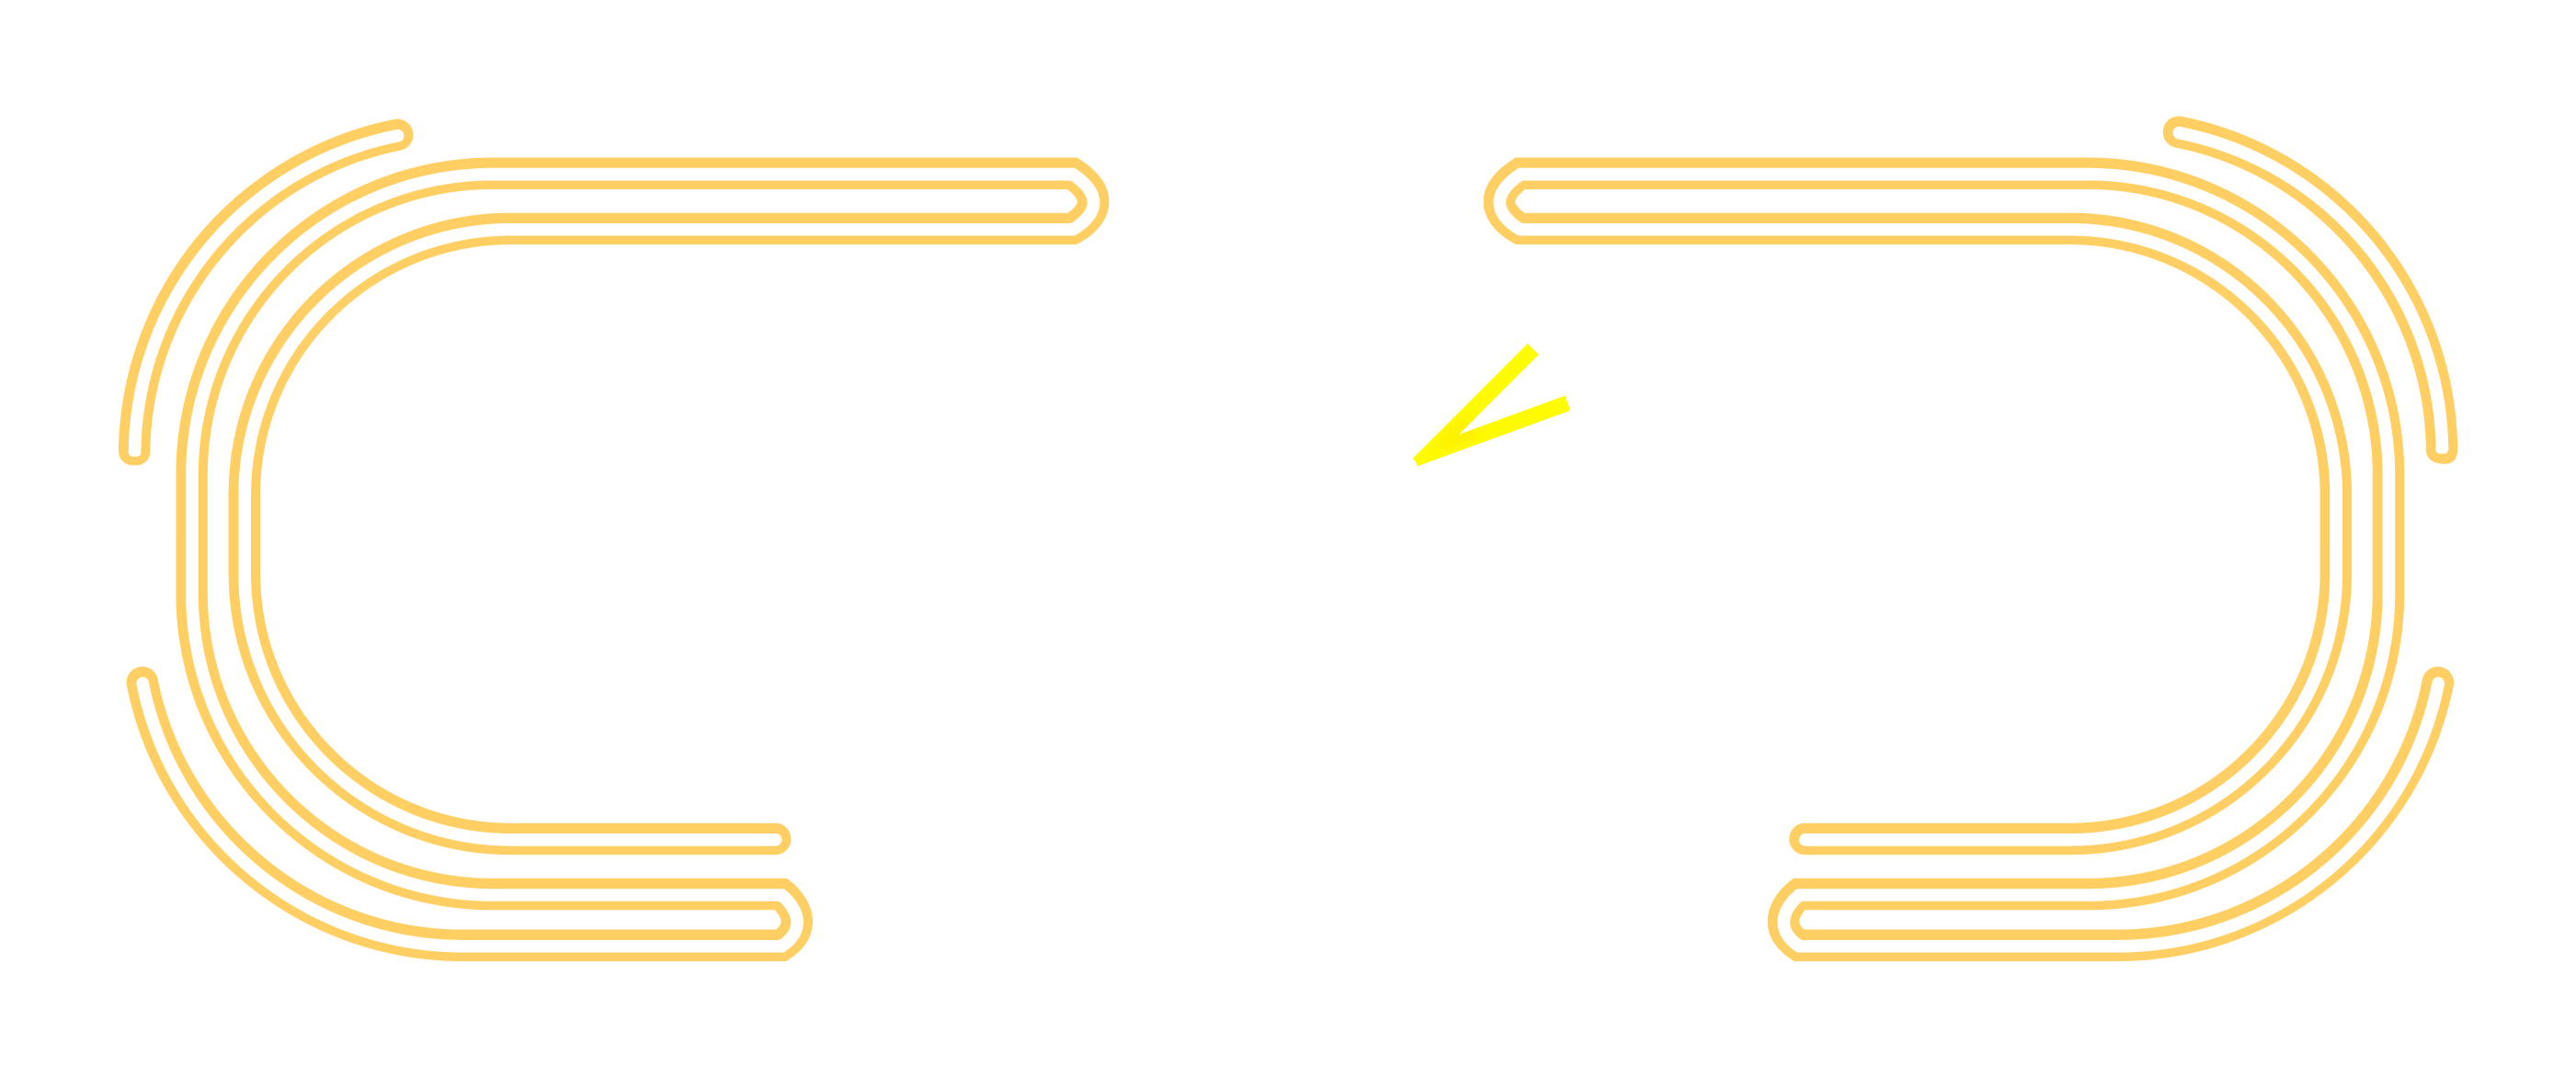 The Vegas Lawyers logo